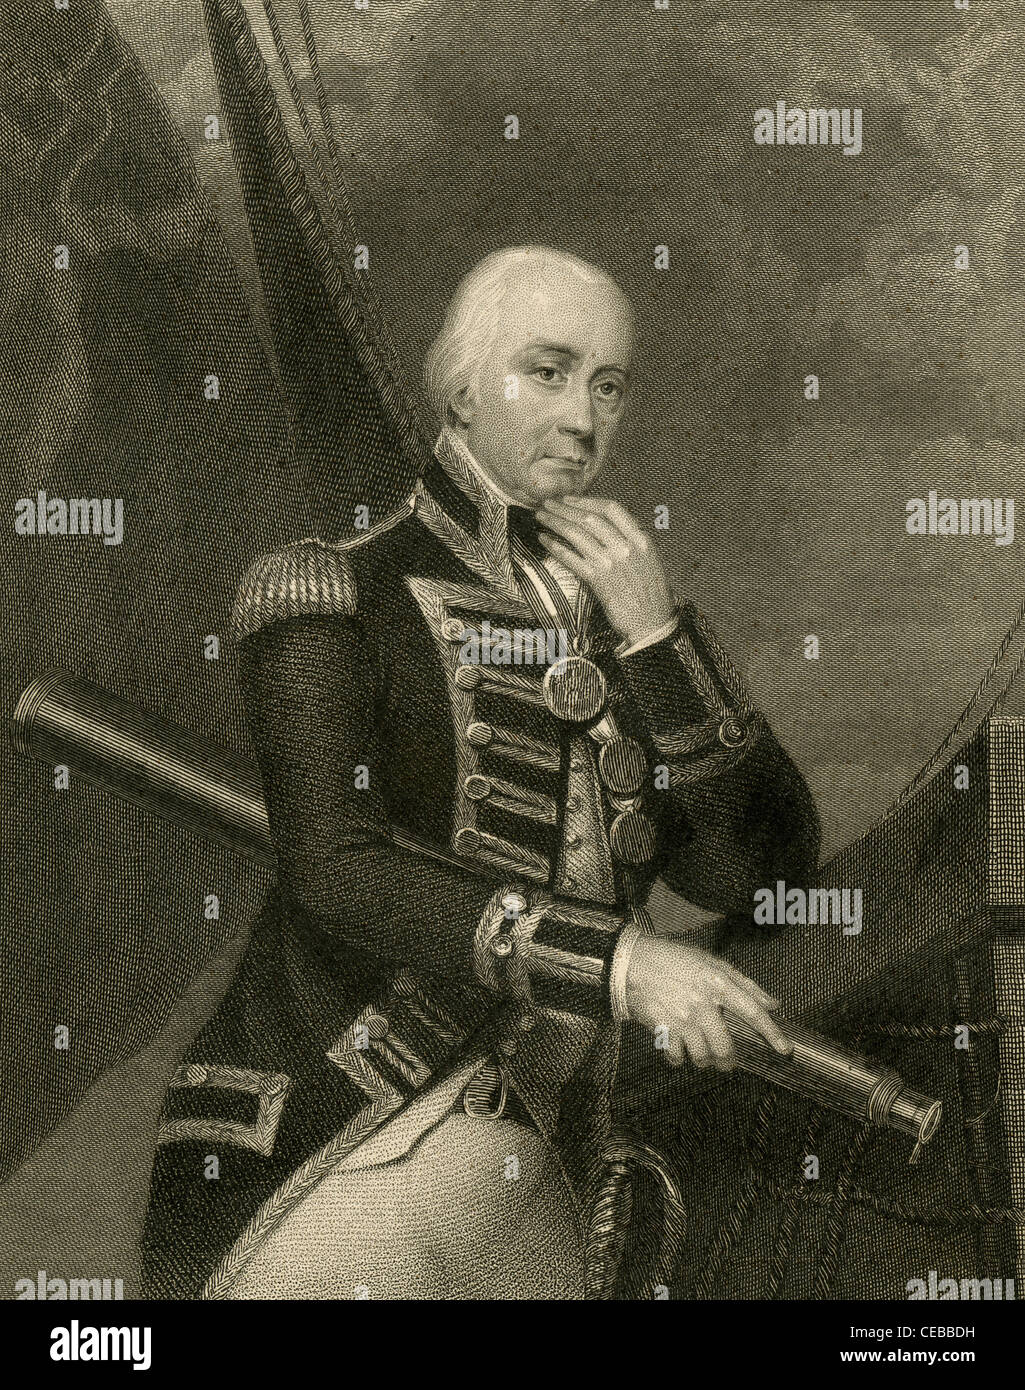 1830-Gravur von Vizeadmiral Cuthbert Collingwood, 1. Baron Collingwood. Stockfoto